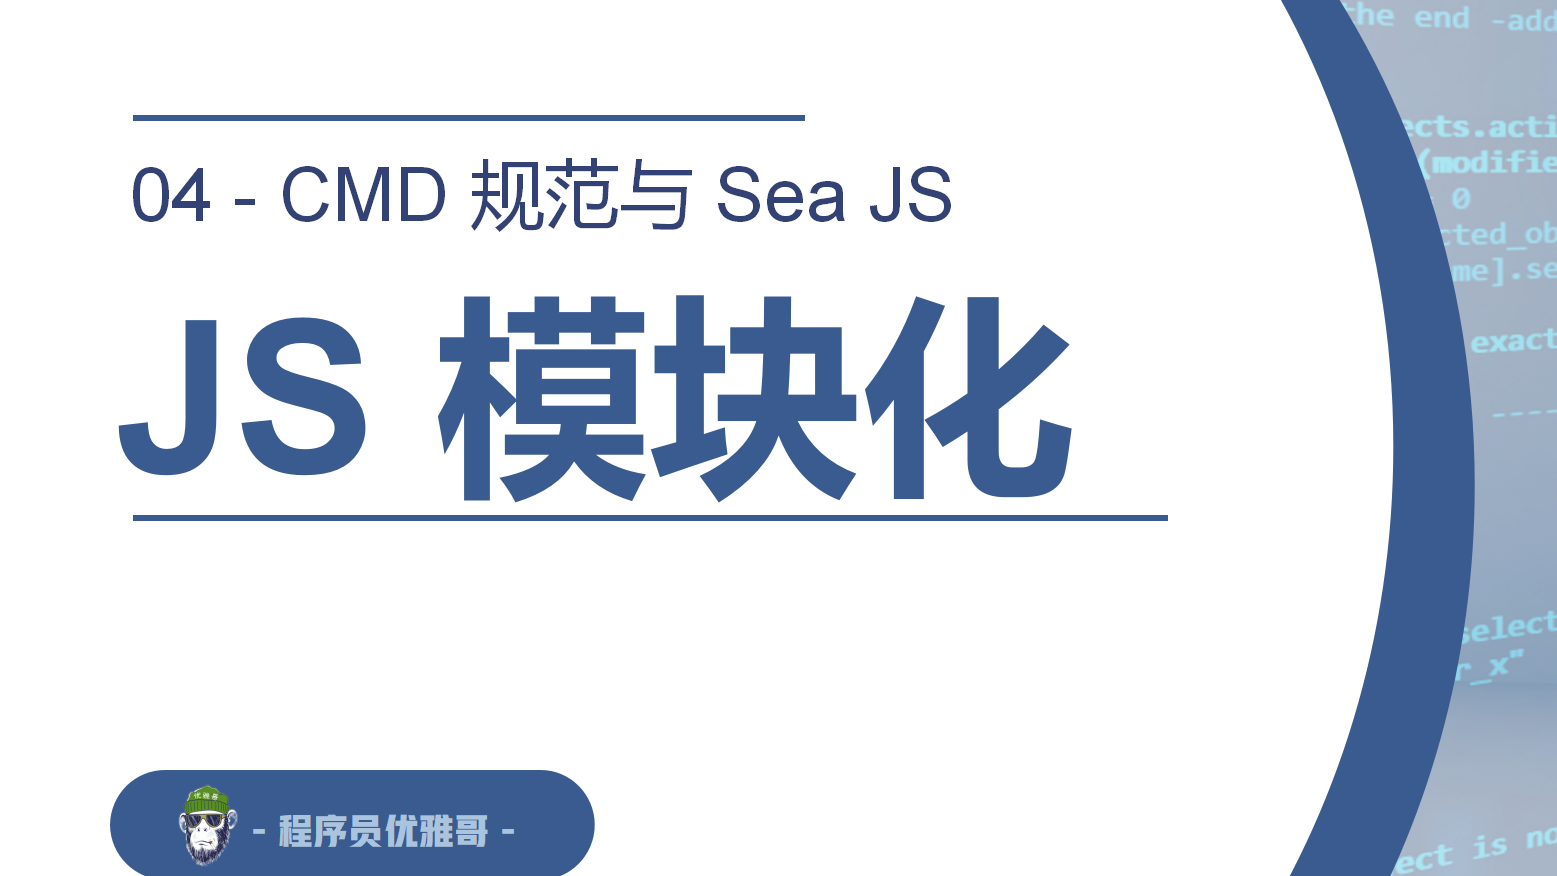  JS 模块化- 04 CMD 规范与 Sea JS